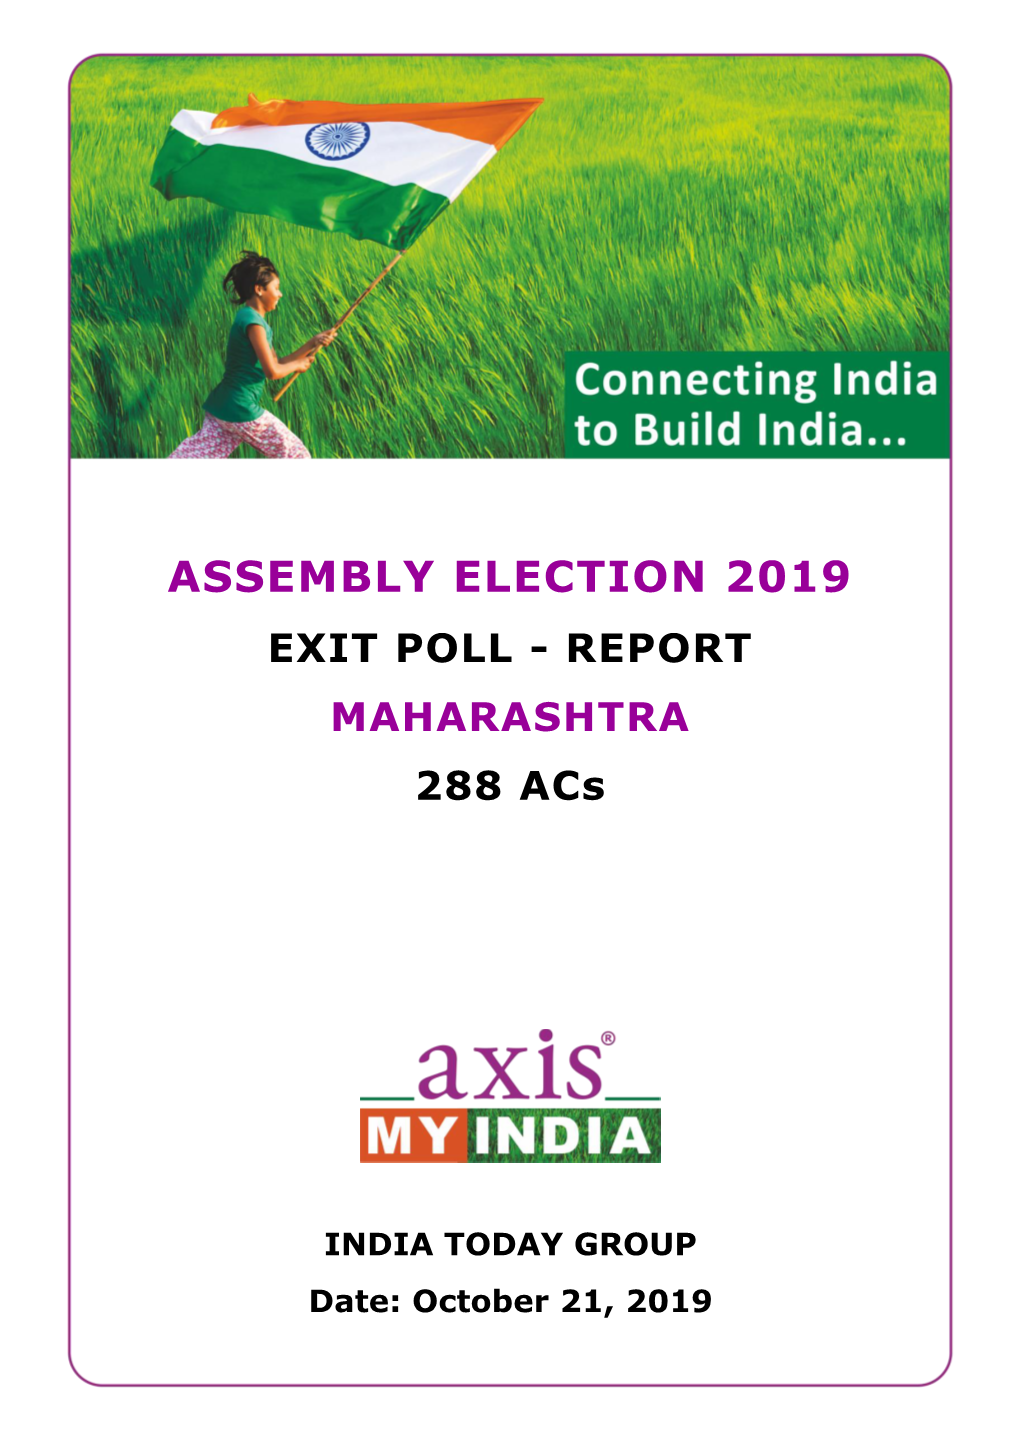 ASSEMBLY ELECTION 2019 EXIT POLL - REPORT MAHARASHTRA 288 Acs